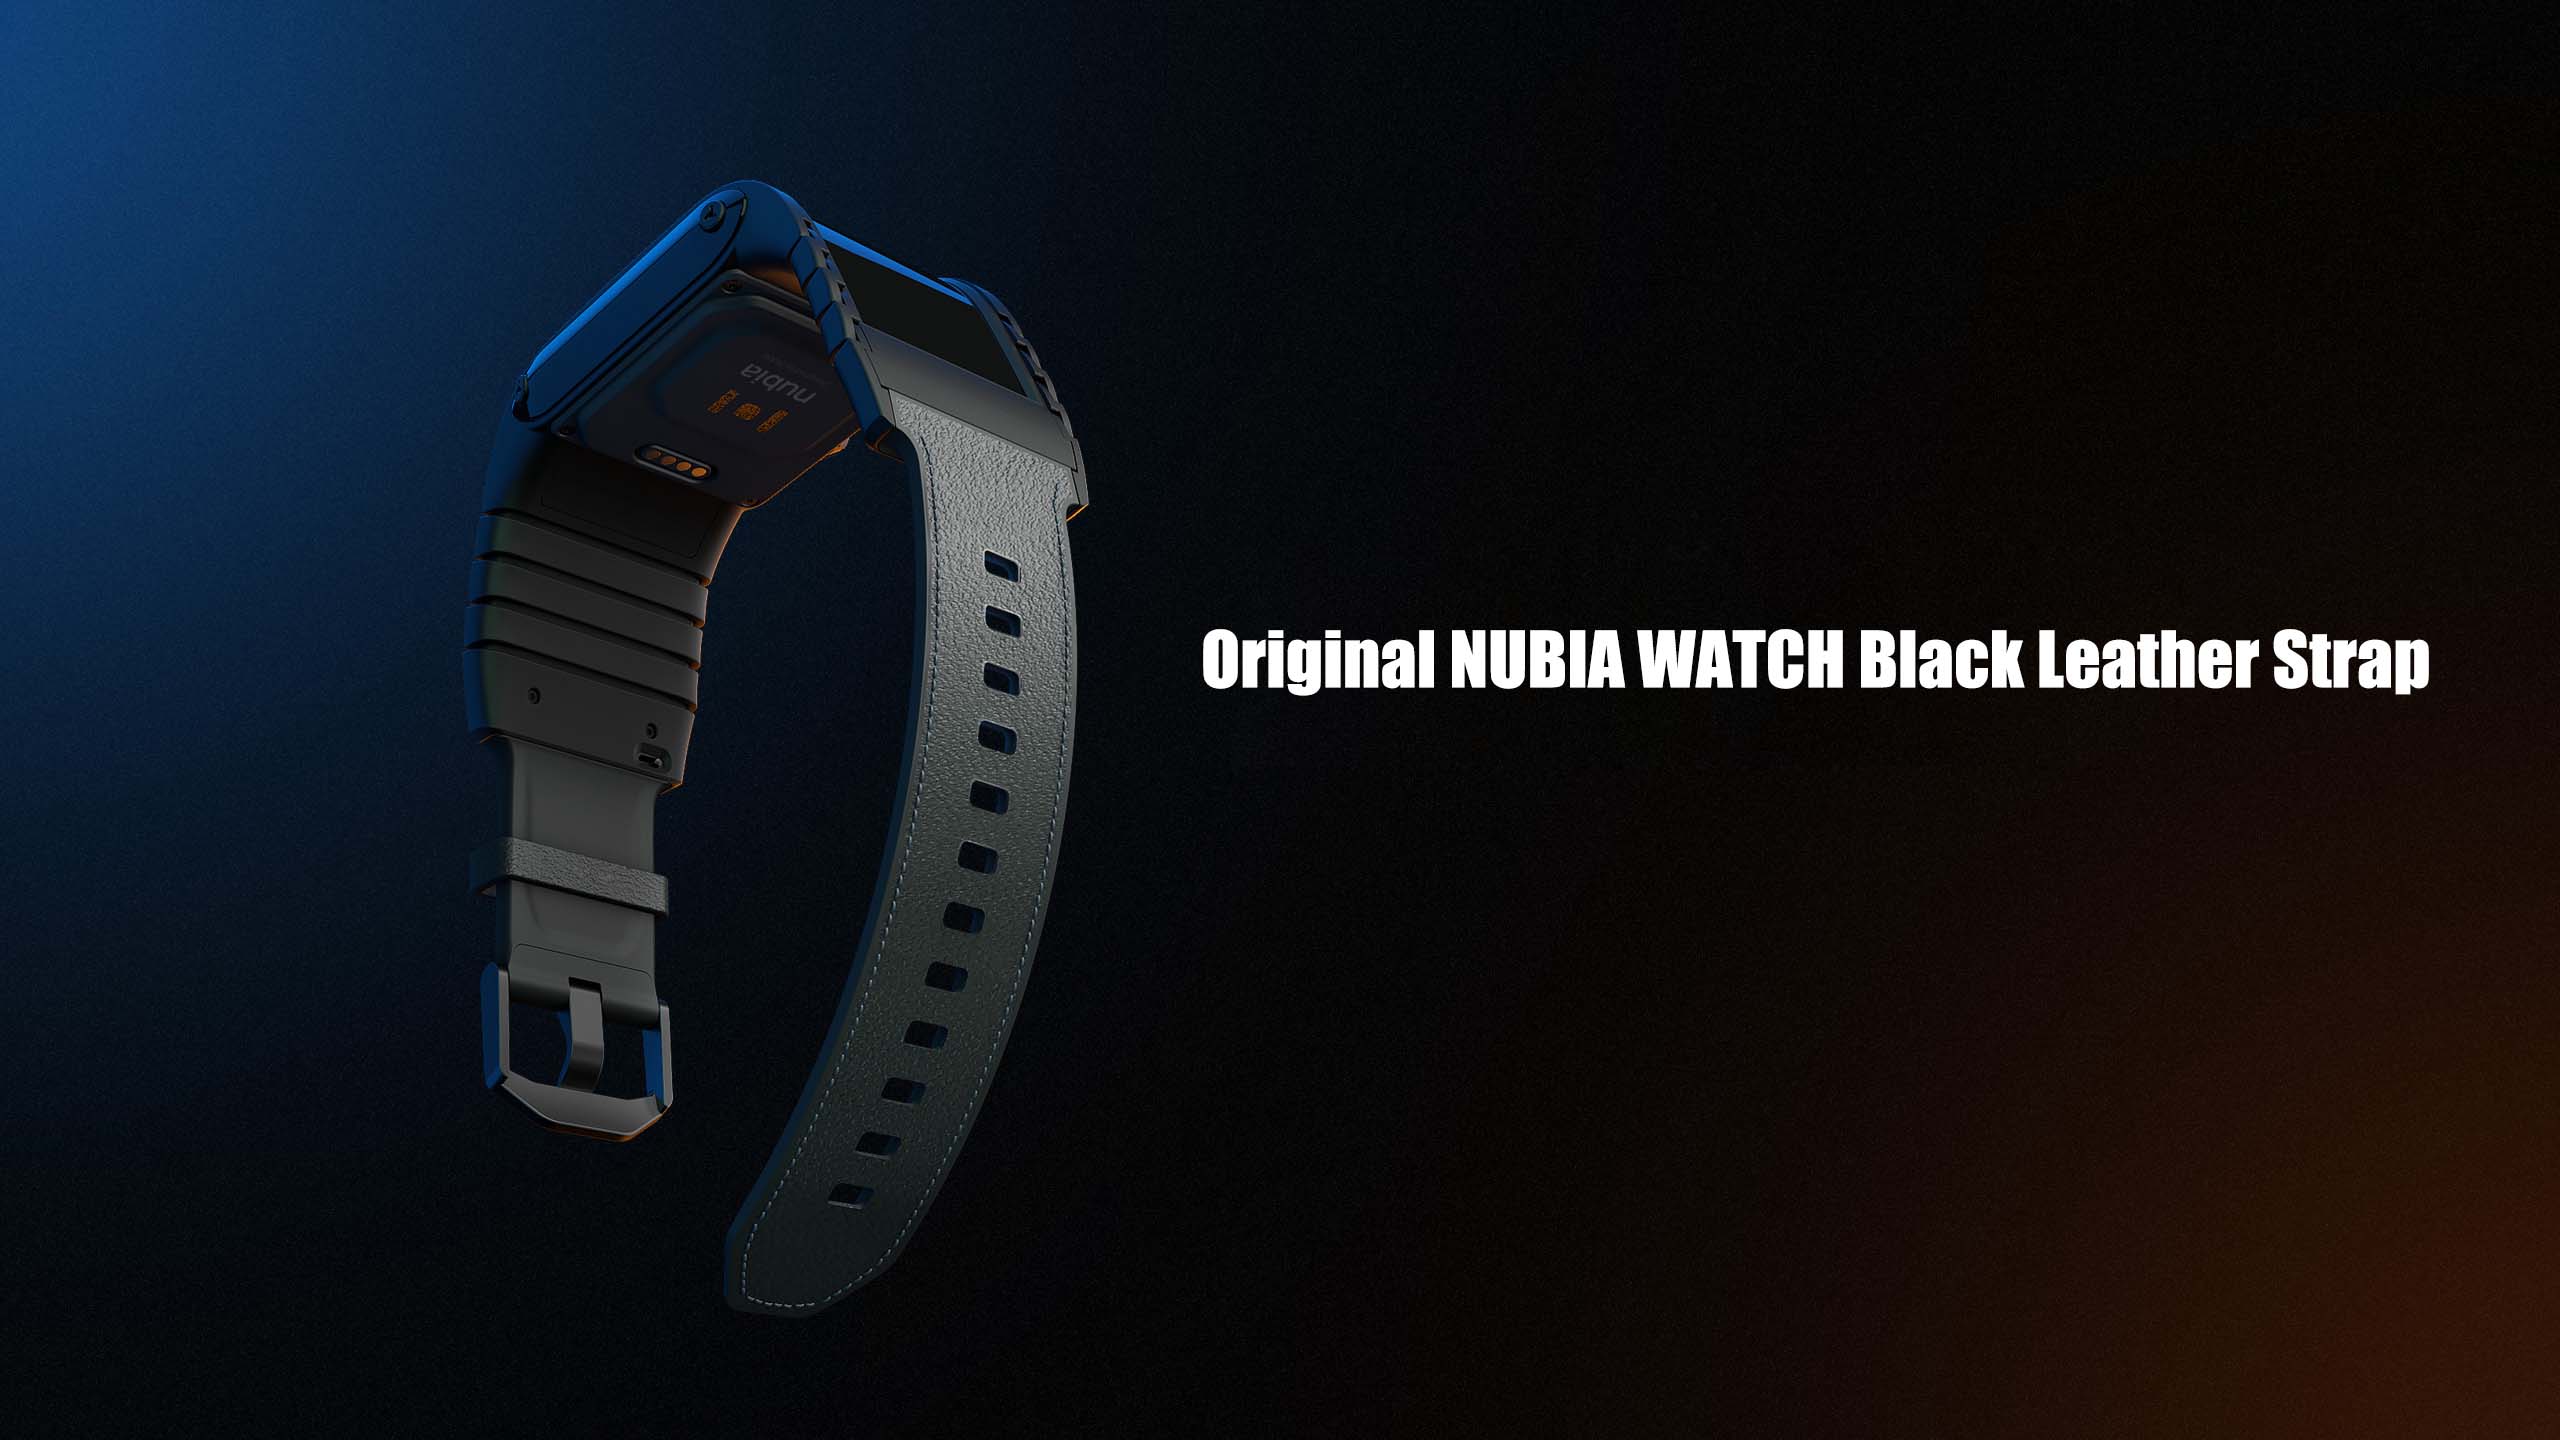 Original NUBIA WATCH Black Leather Strap